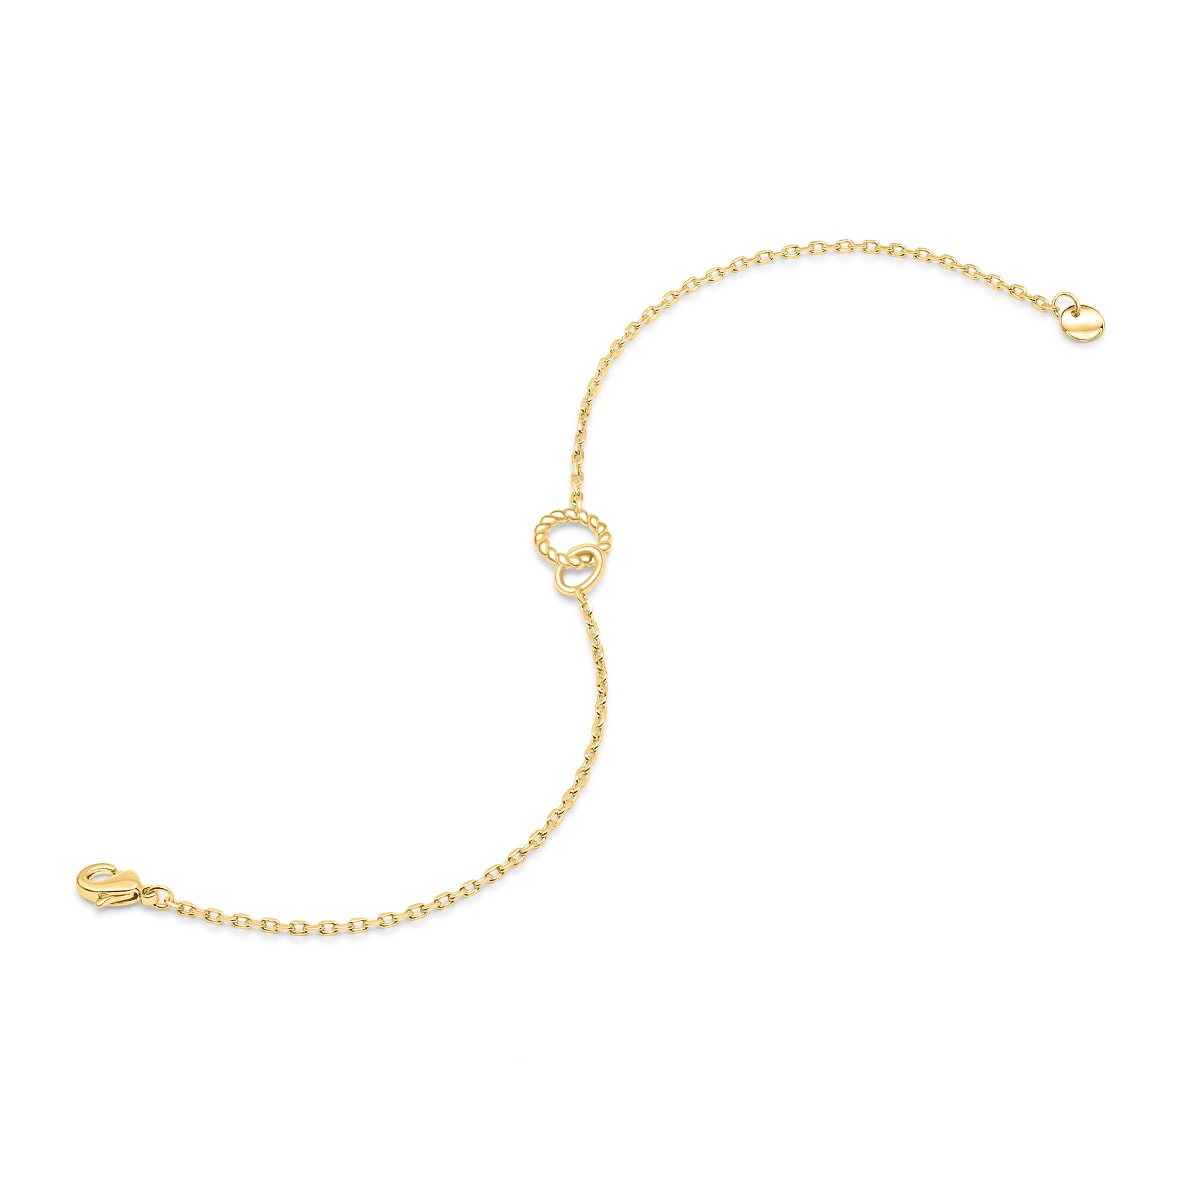 Minimal gold chain bracelet